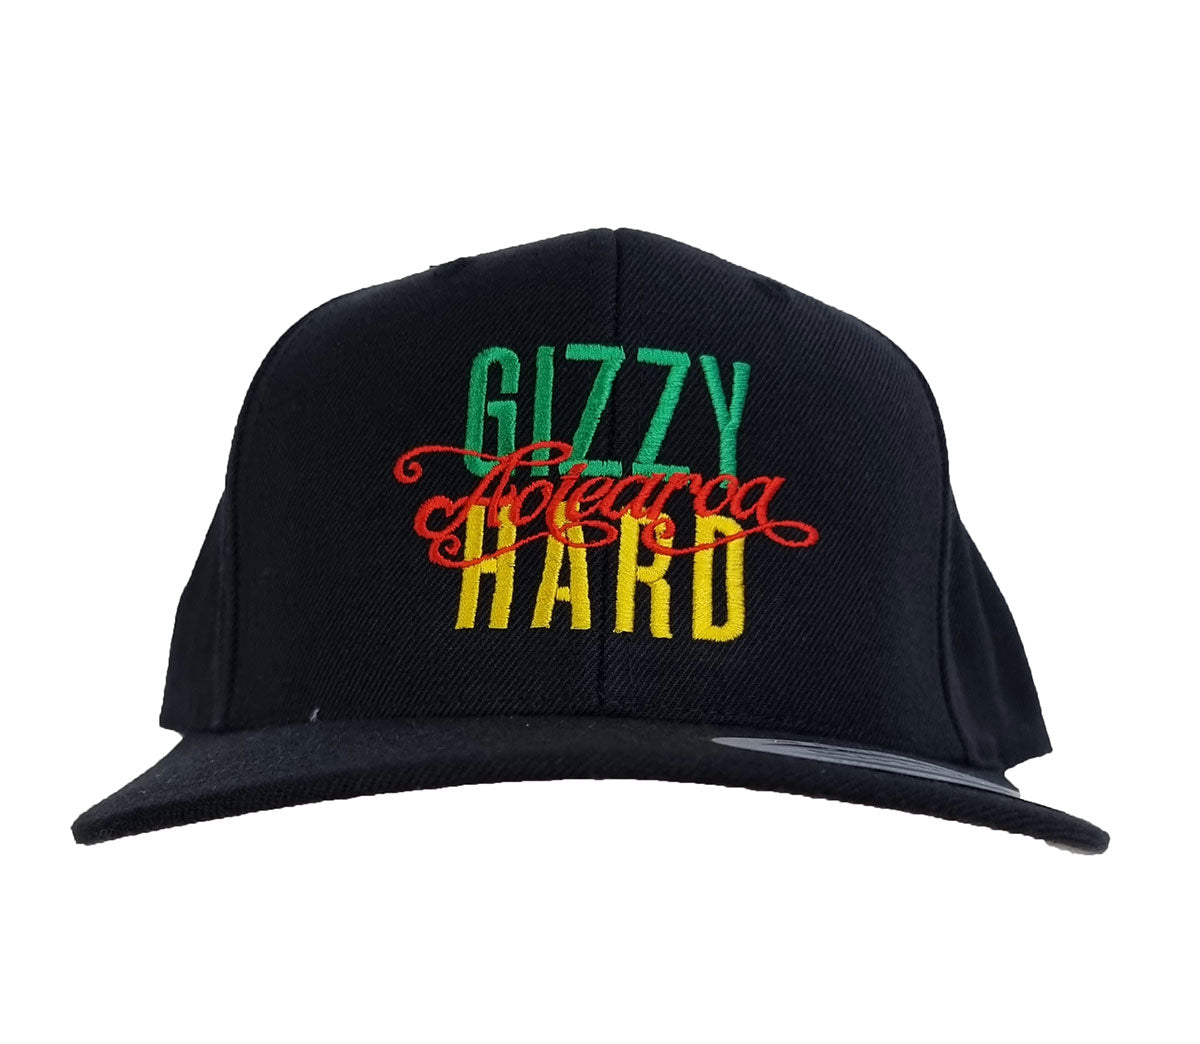 Gizzy Hard Aotearoa Flexfit Curved Peak Cap in black